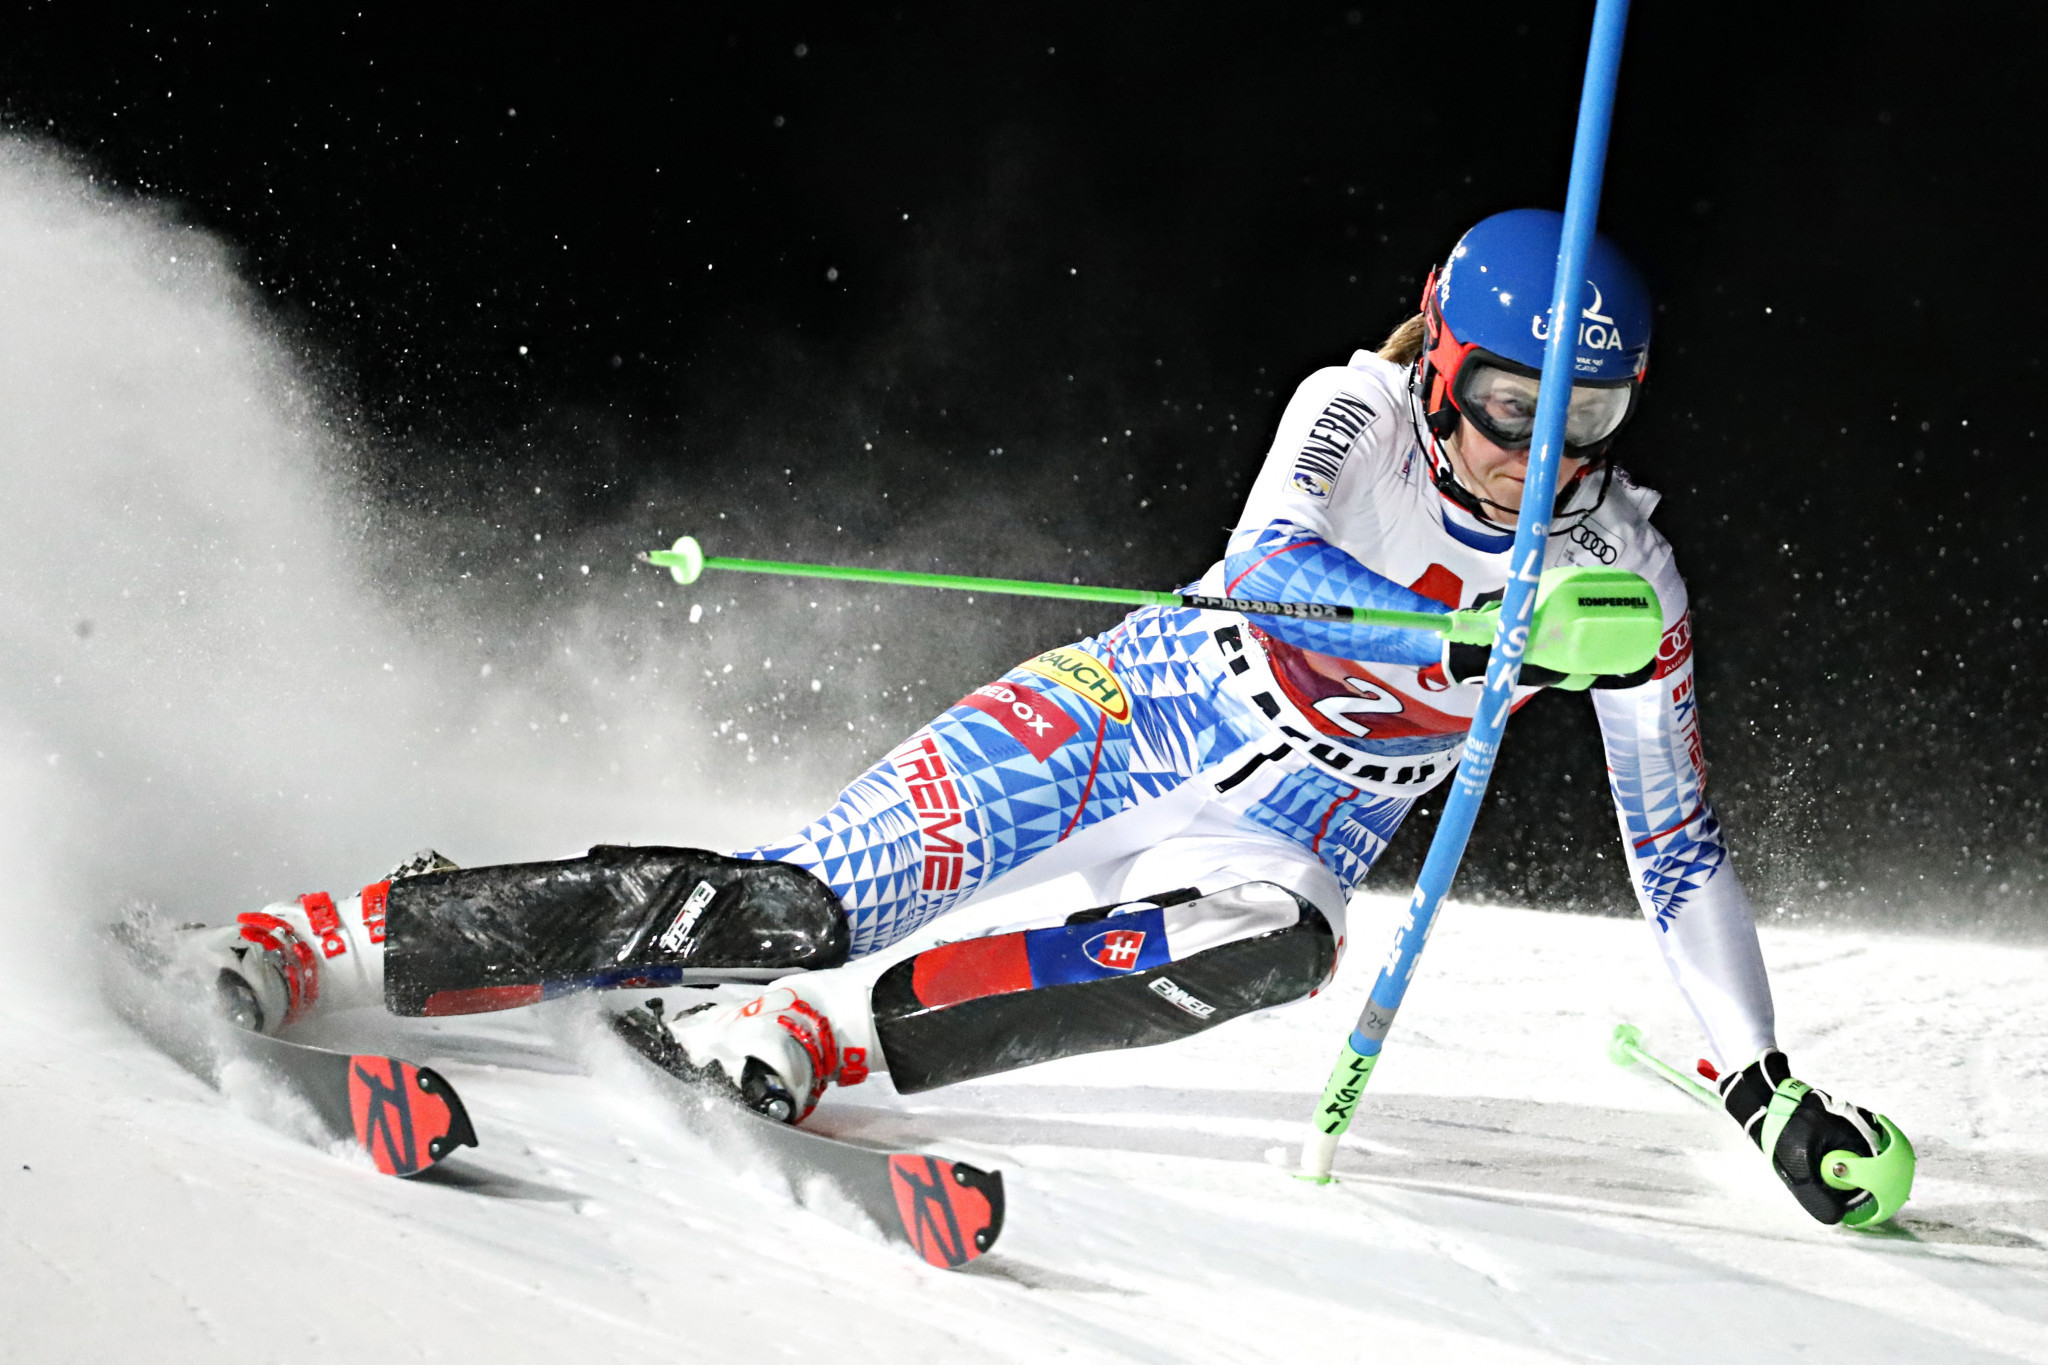 Vlhová wins second consecutive FIS Alpine Skiing World Cup slalom event